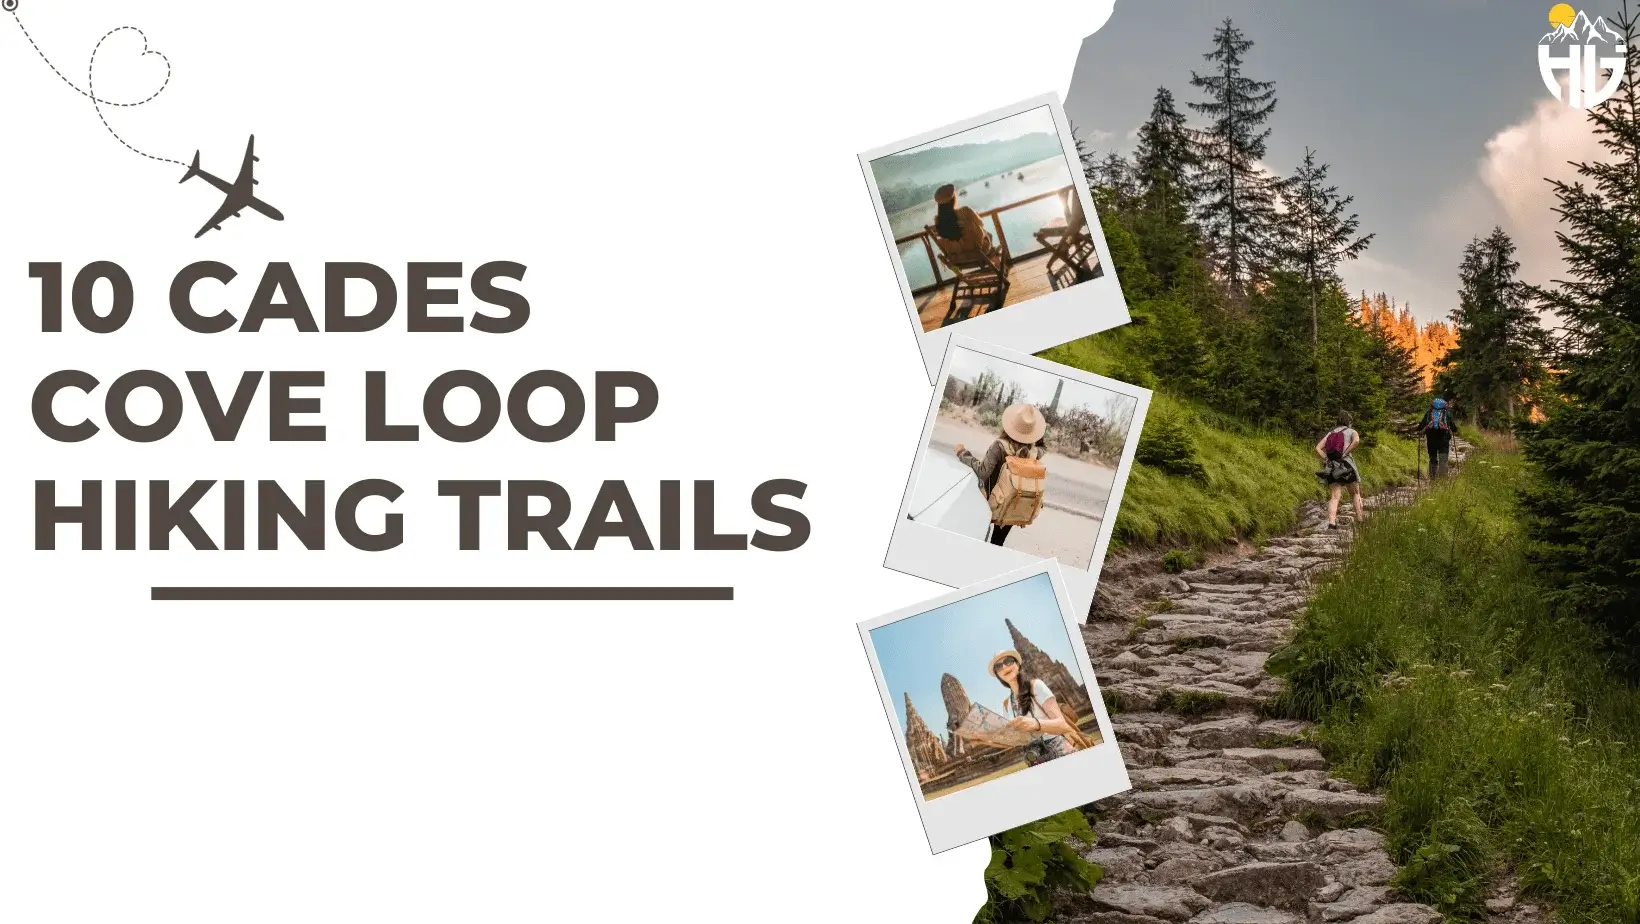 10 Cades Cove Loop Hiking Trails